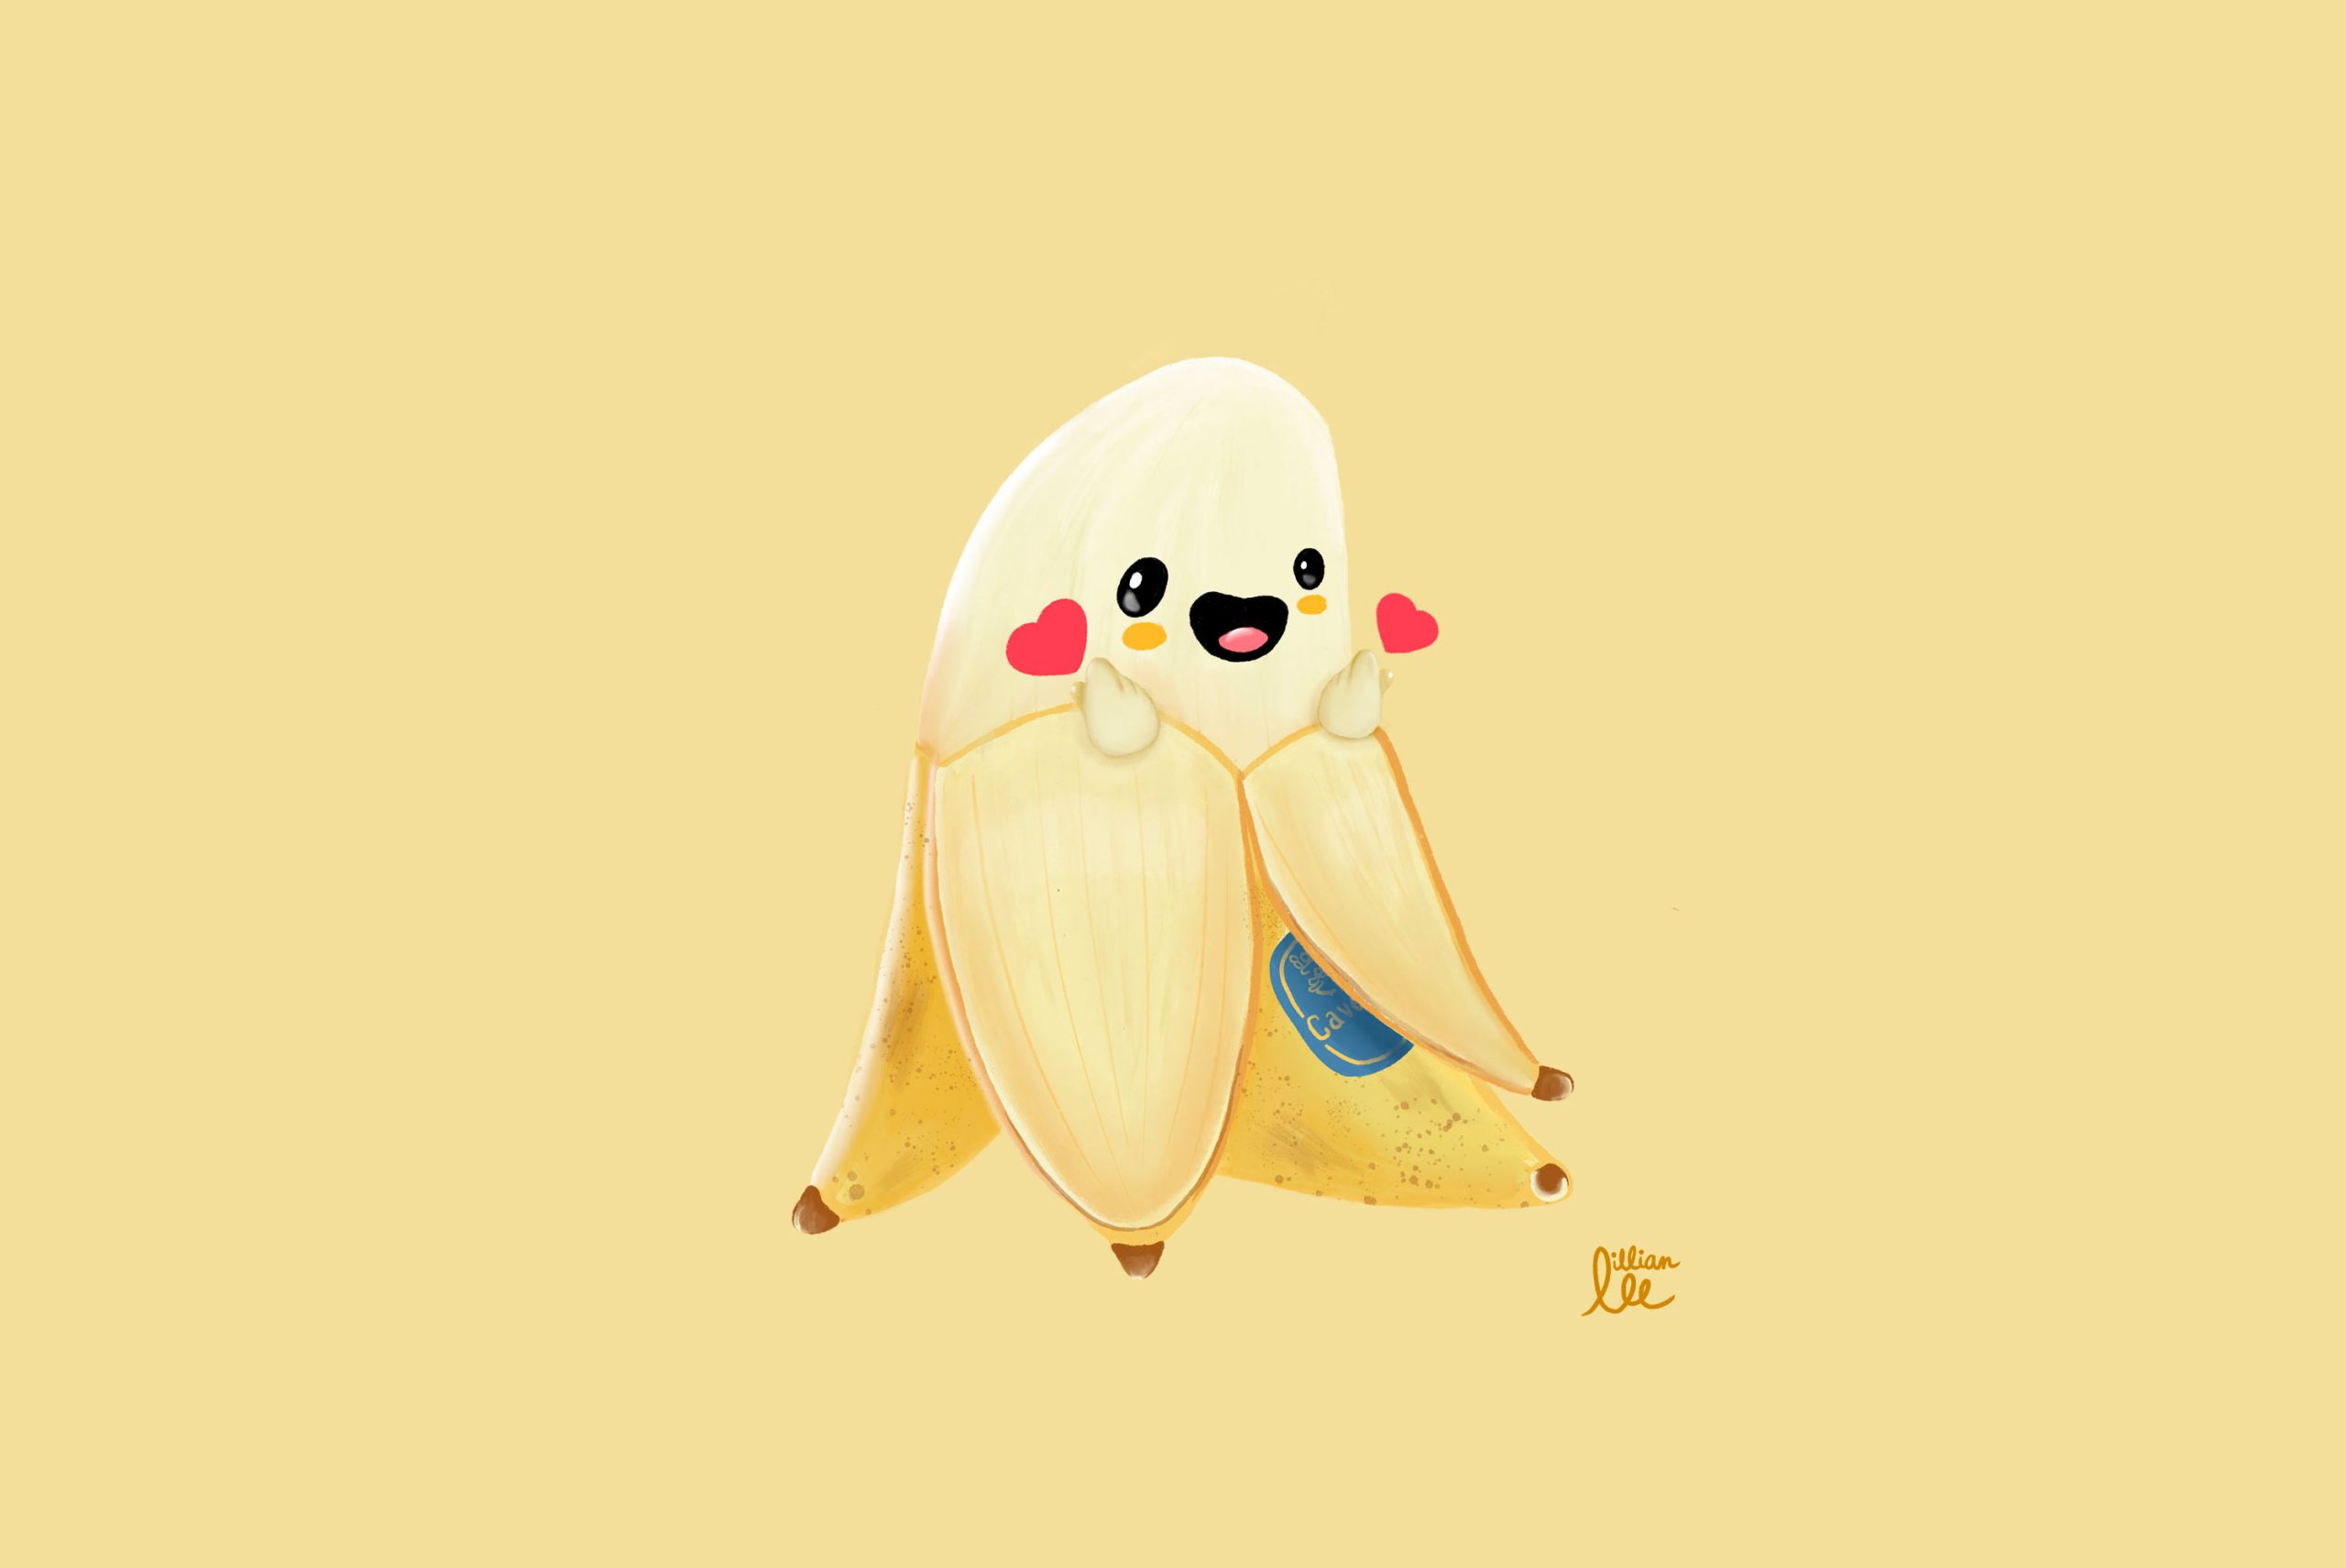 All the Peels banana kawaii art and illustration by Sweet Red Bean